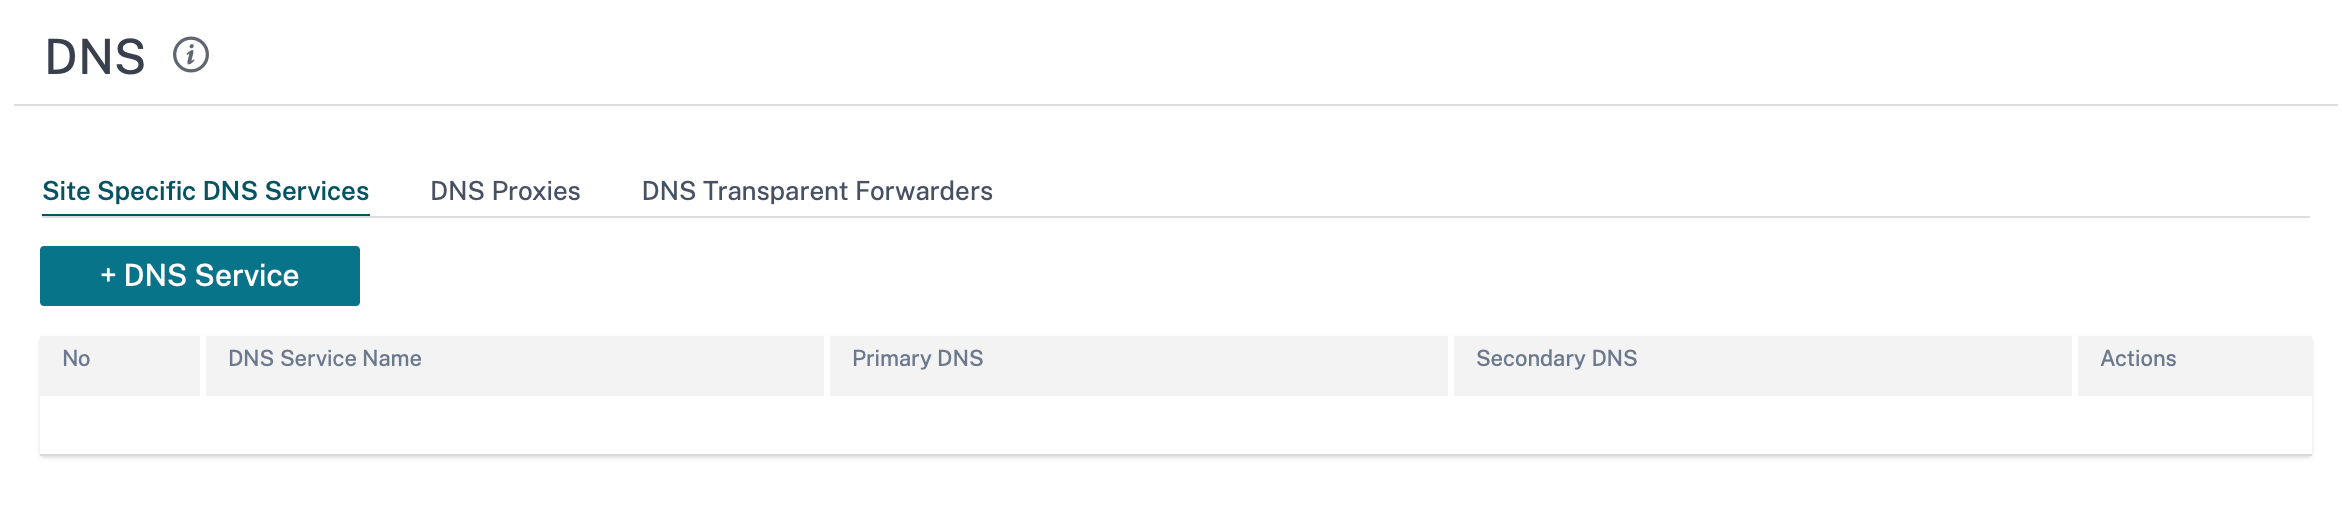 Configuración de DNS de configuración del sitio